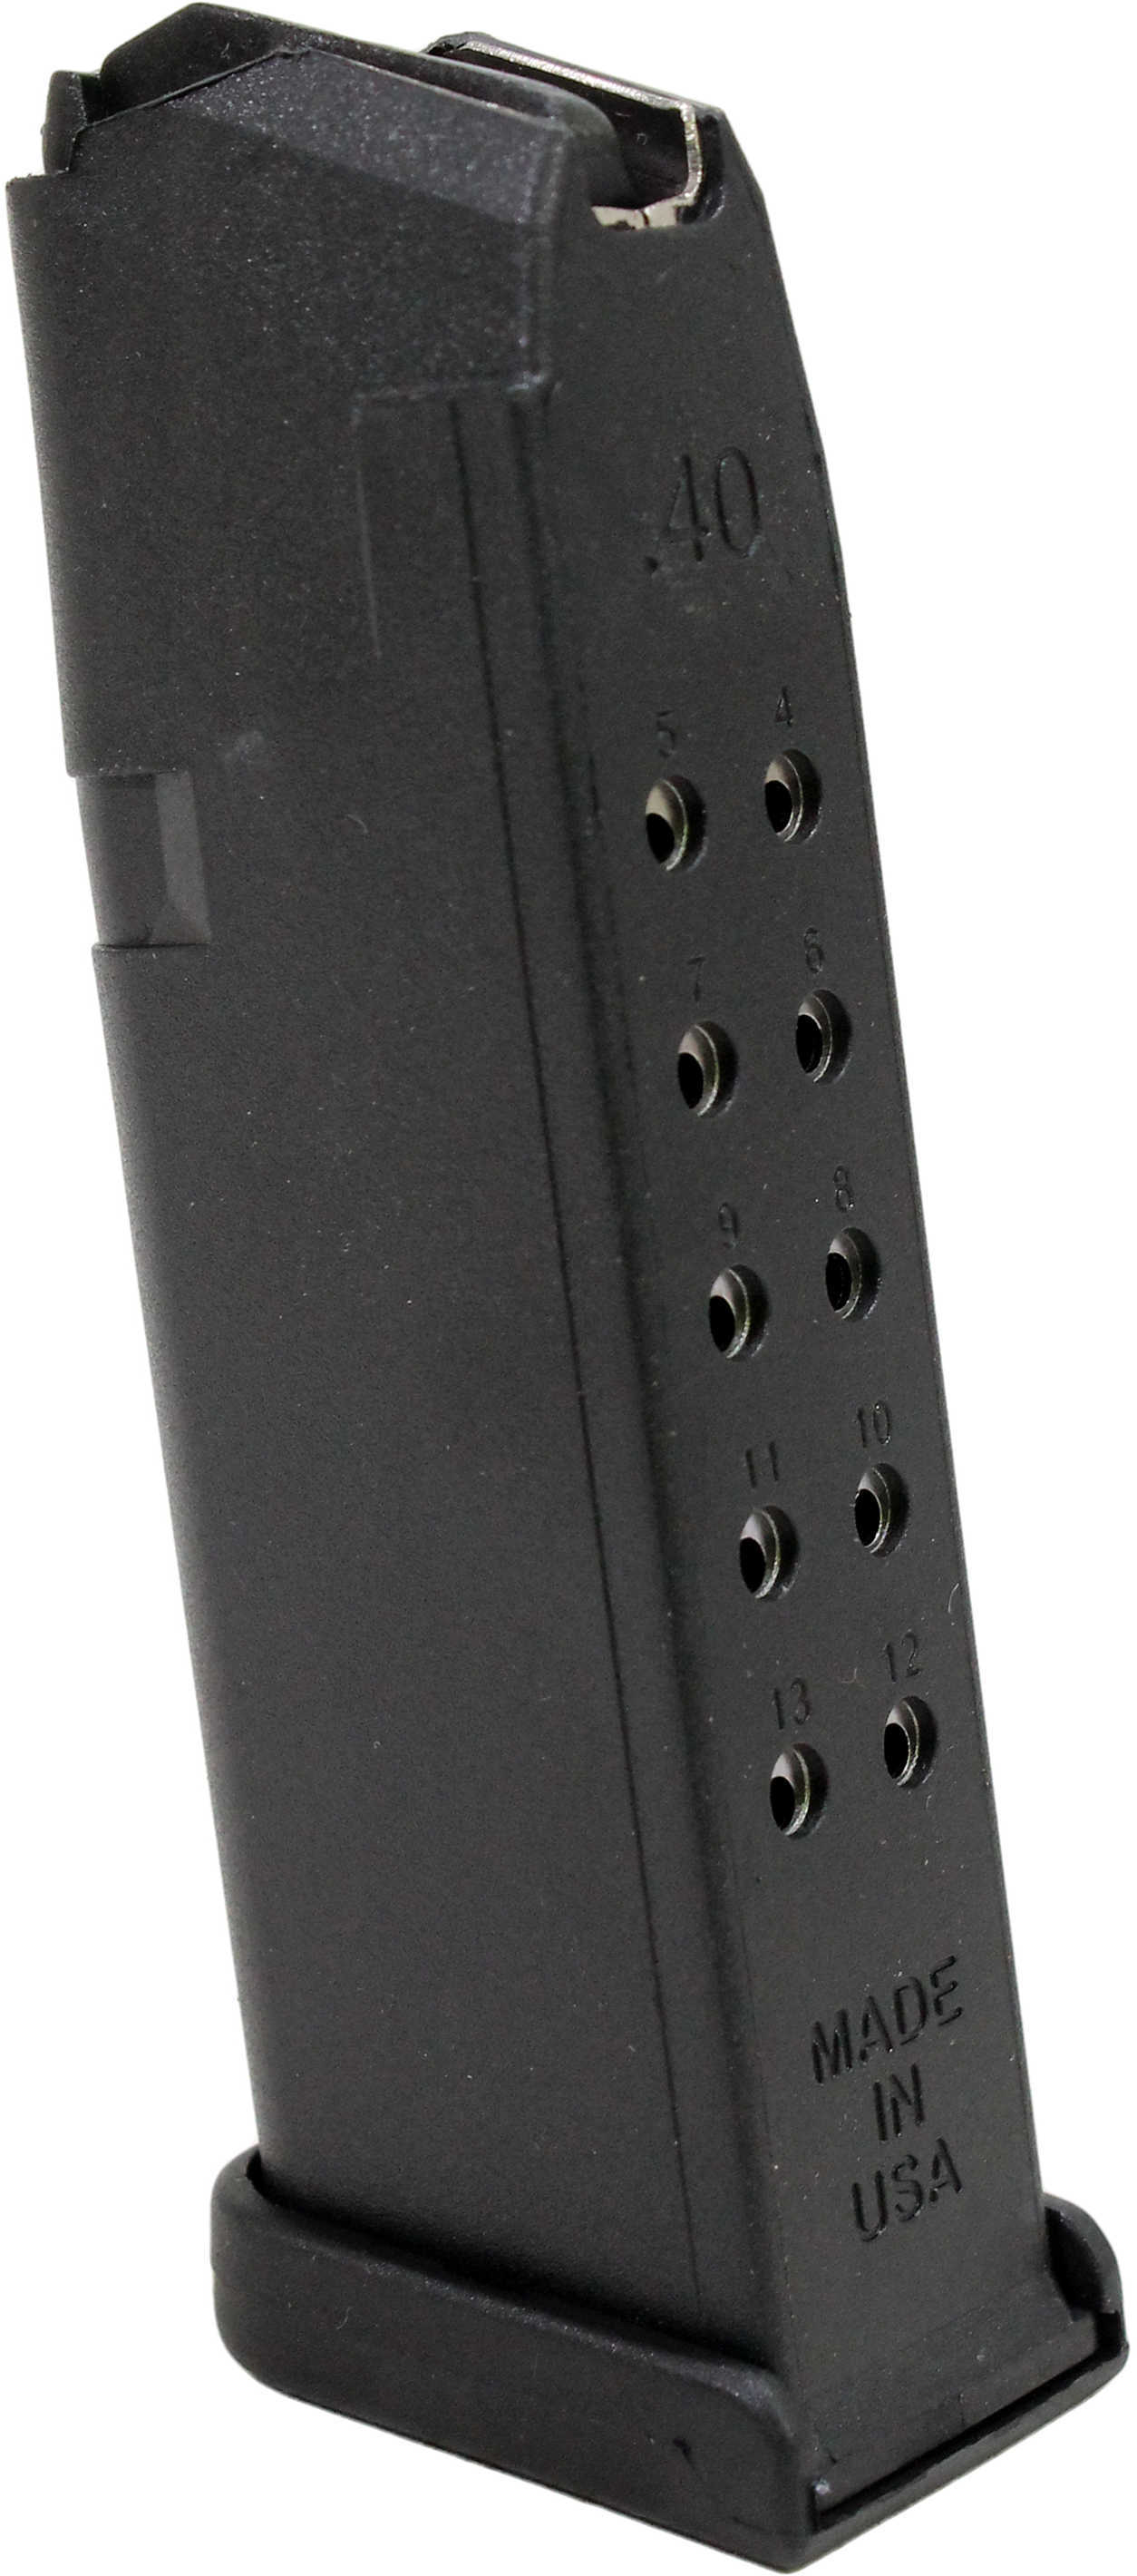 ProMag GLKA11 Replacement Magazine Fits Glock G23 40 S&W 13 Round Polymer Black Finish